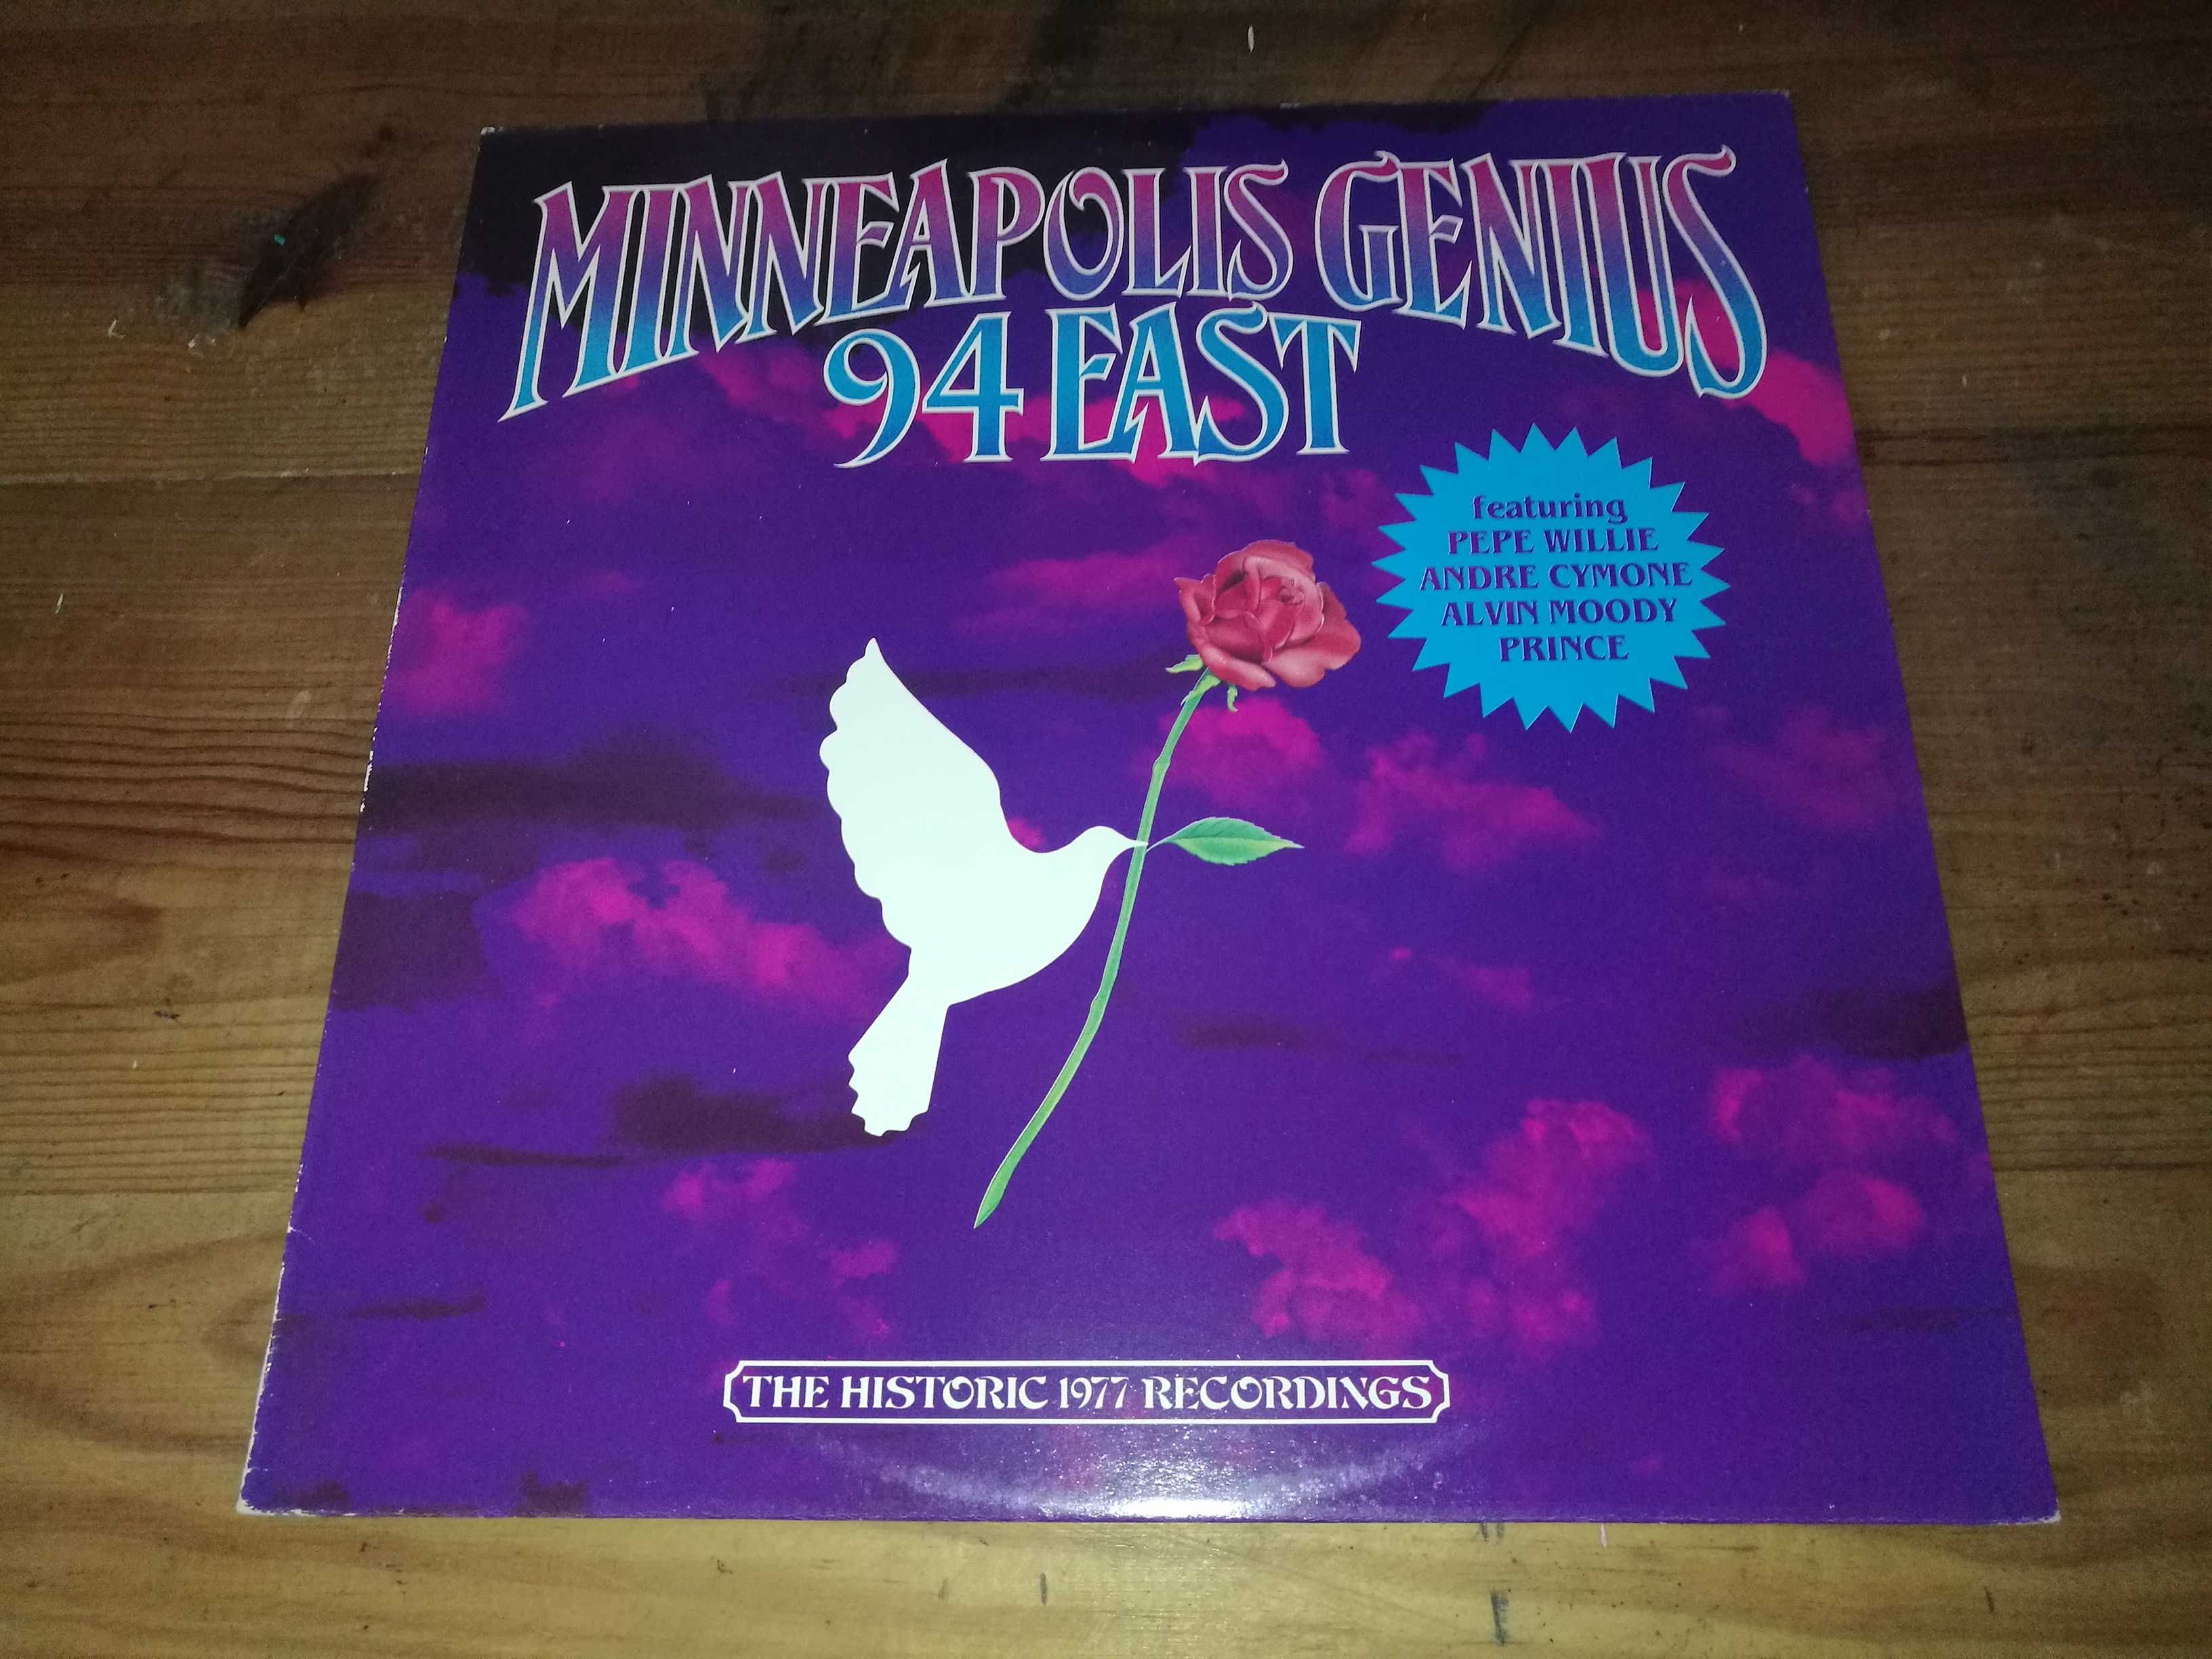 94 East (Prince) - Minneapolis Genius LP NOVO (FUNK)